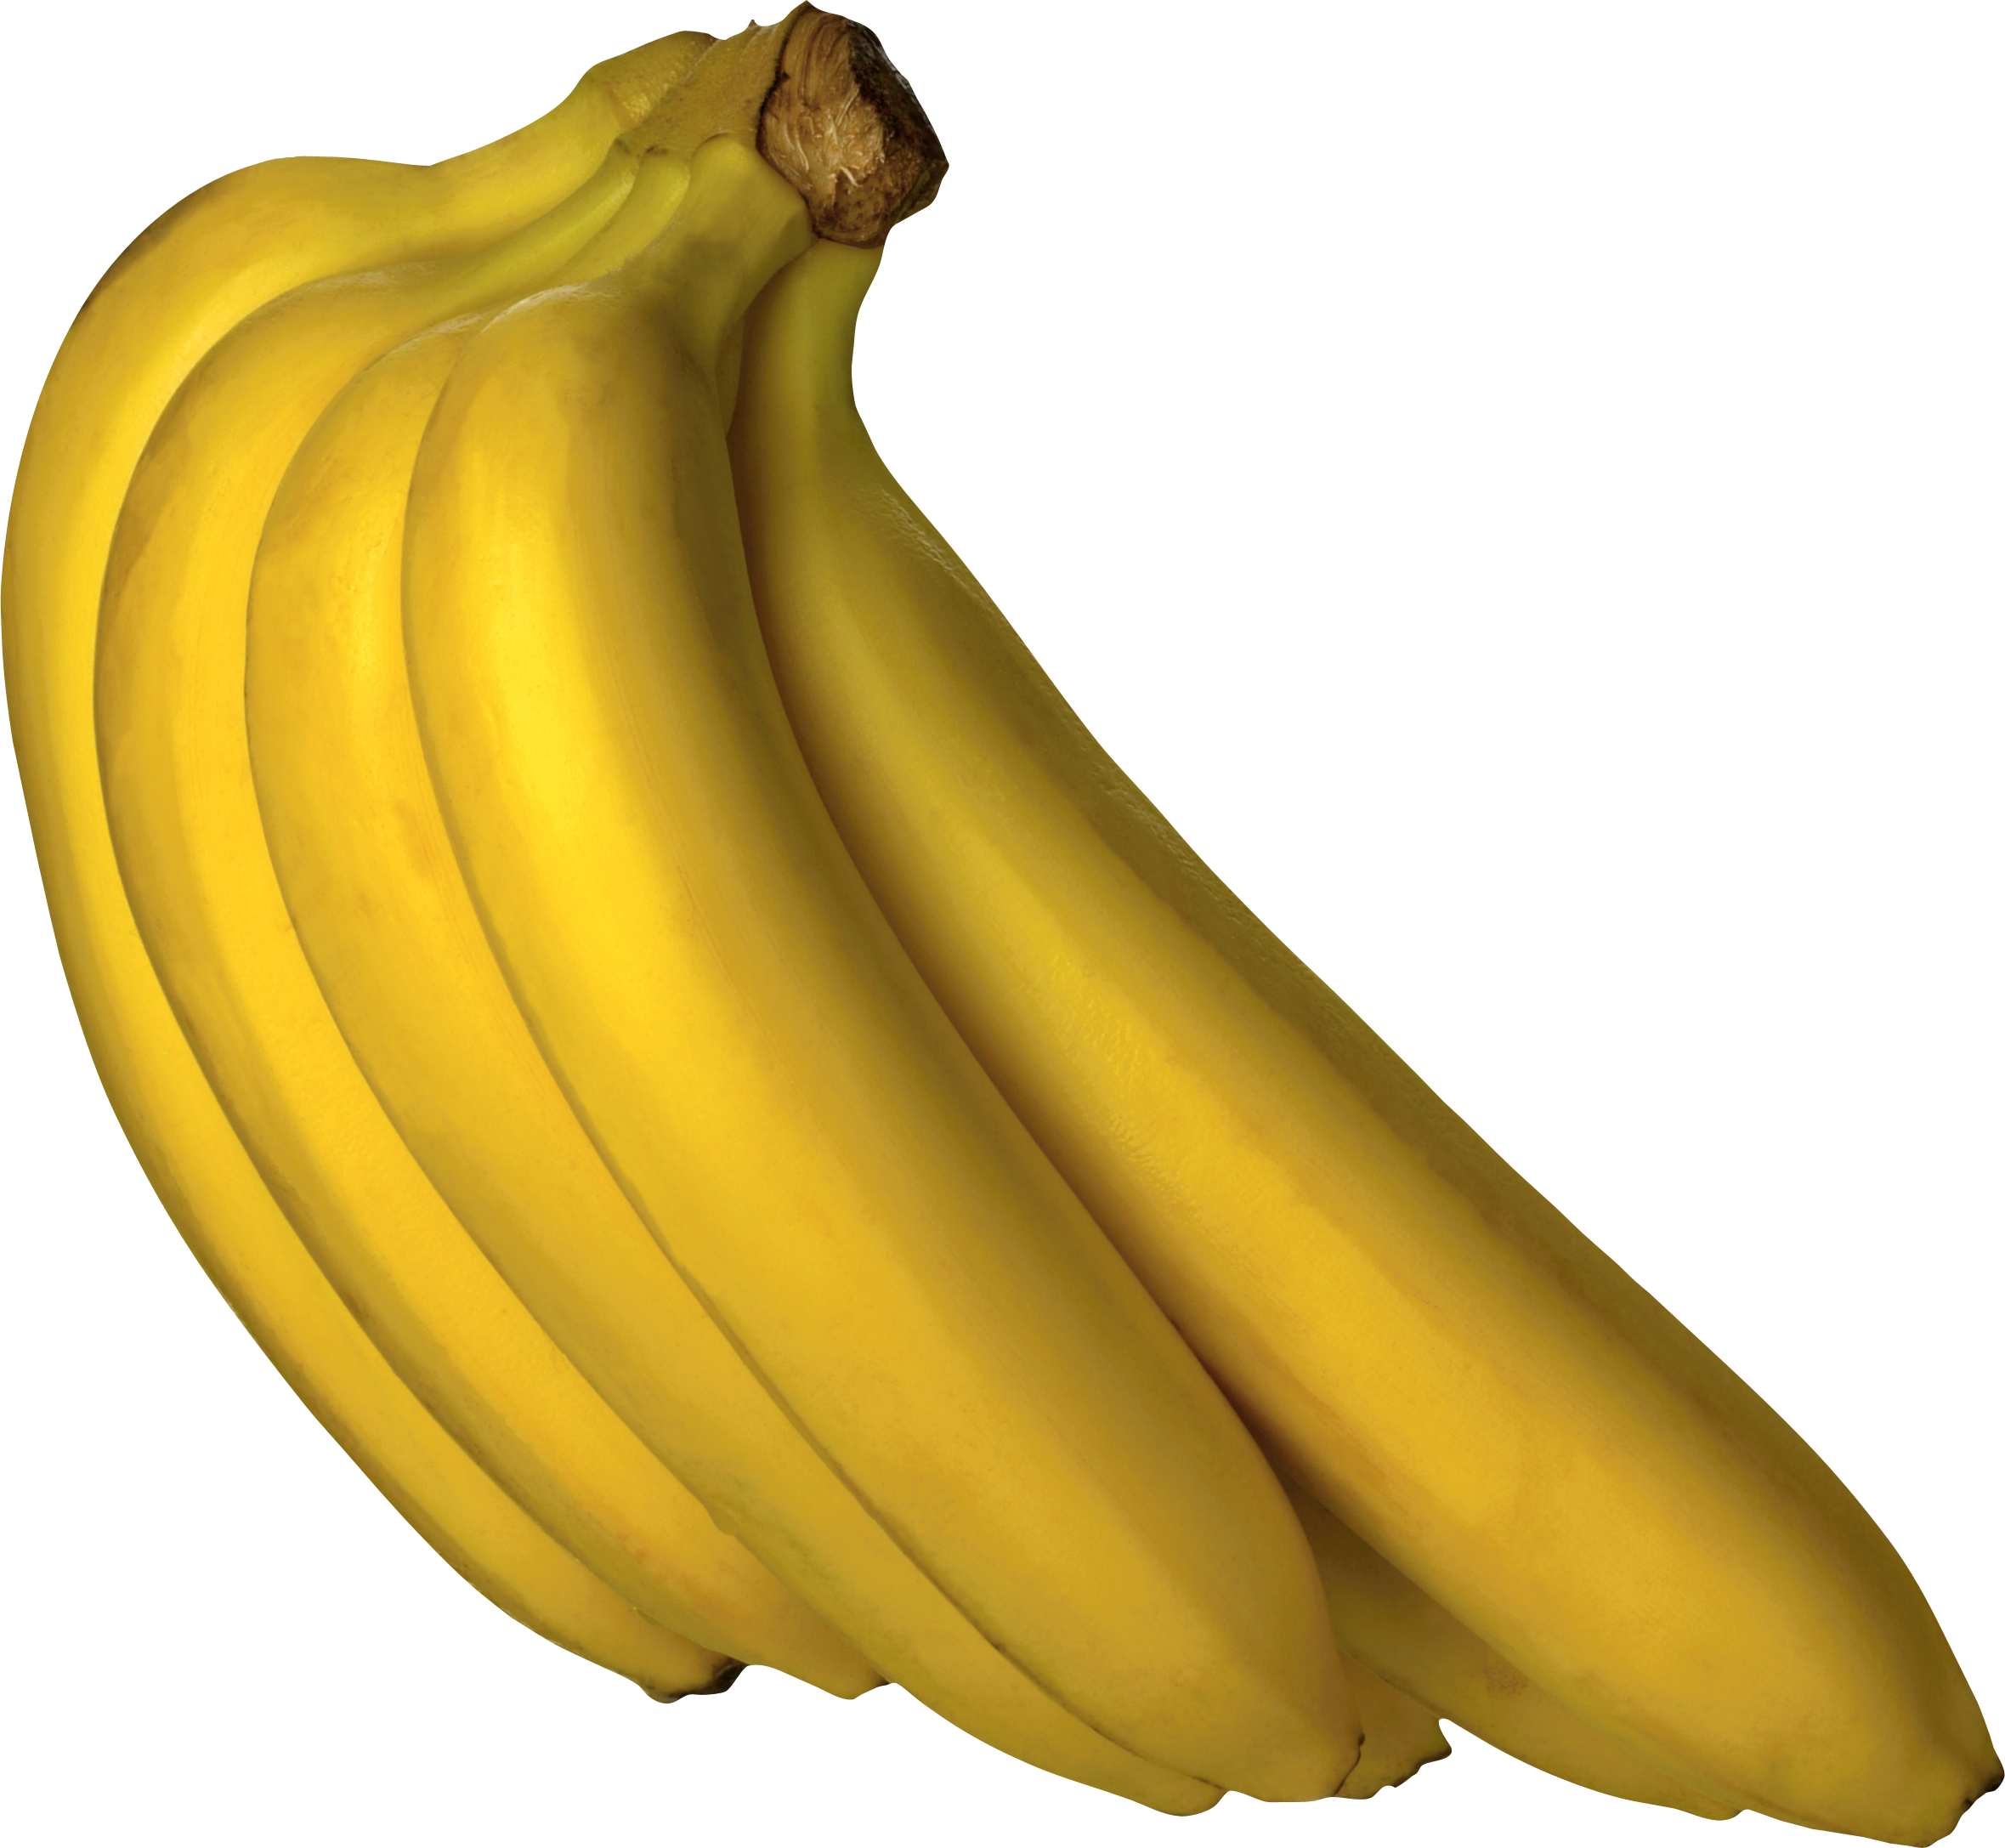 Banana Png Image, Free Picture Downloads, Bananas - 4 Bananas Png (2359x2174)